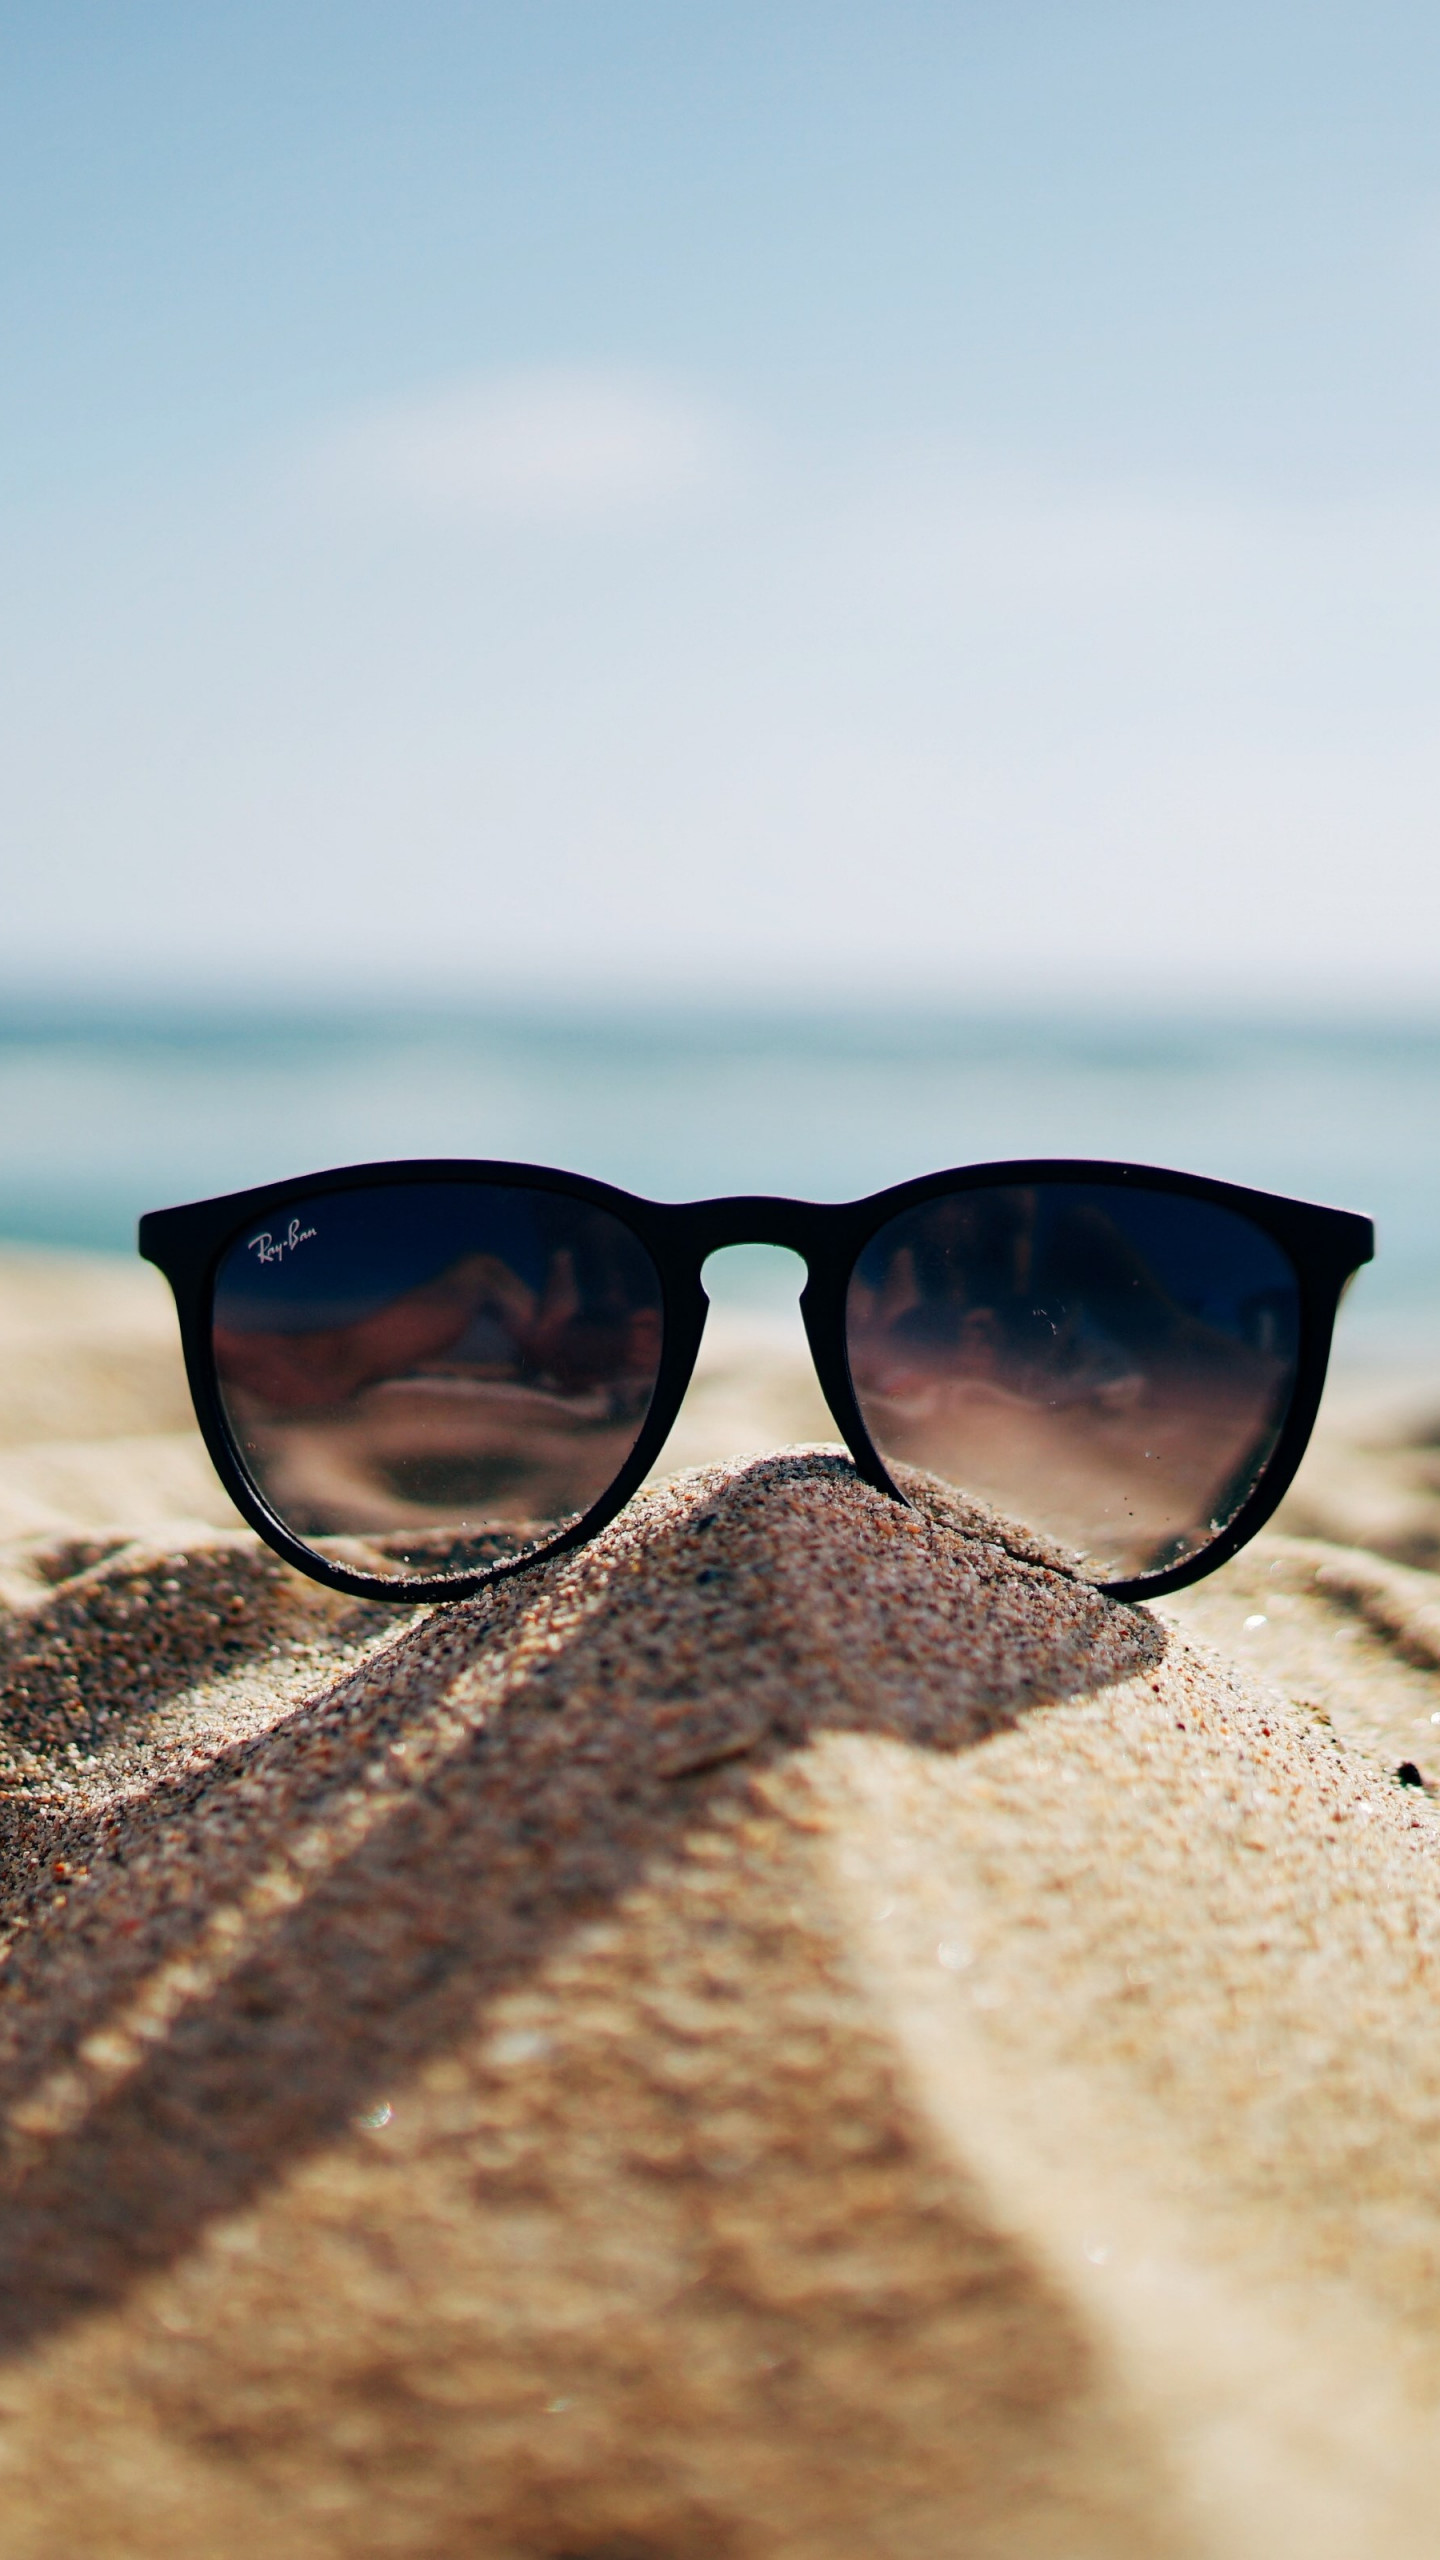 Ray Ban sunglasses on hot sand beach wallpaper 1440x2560